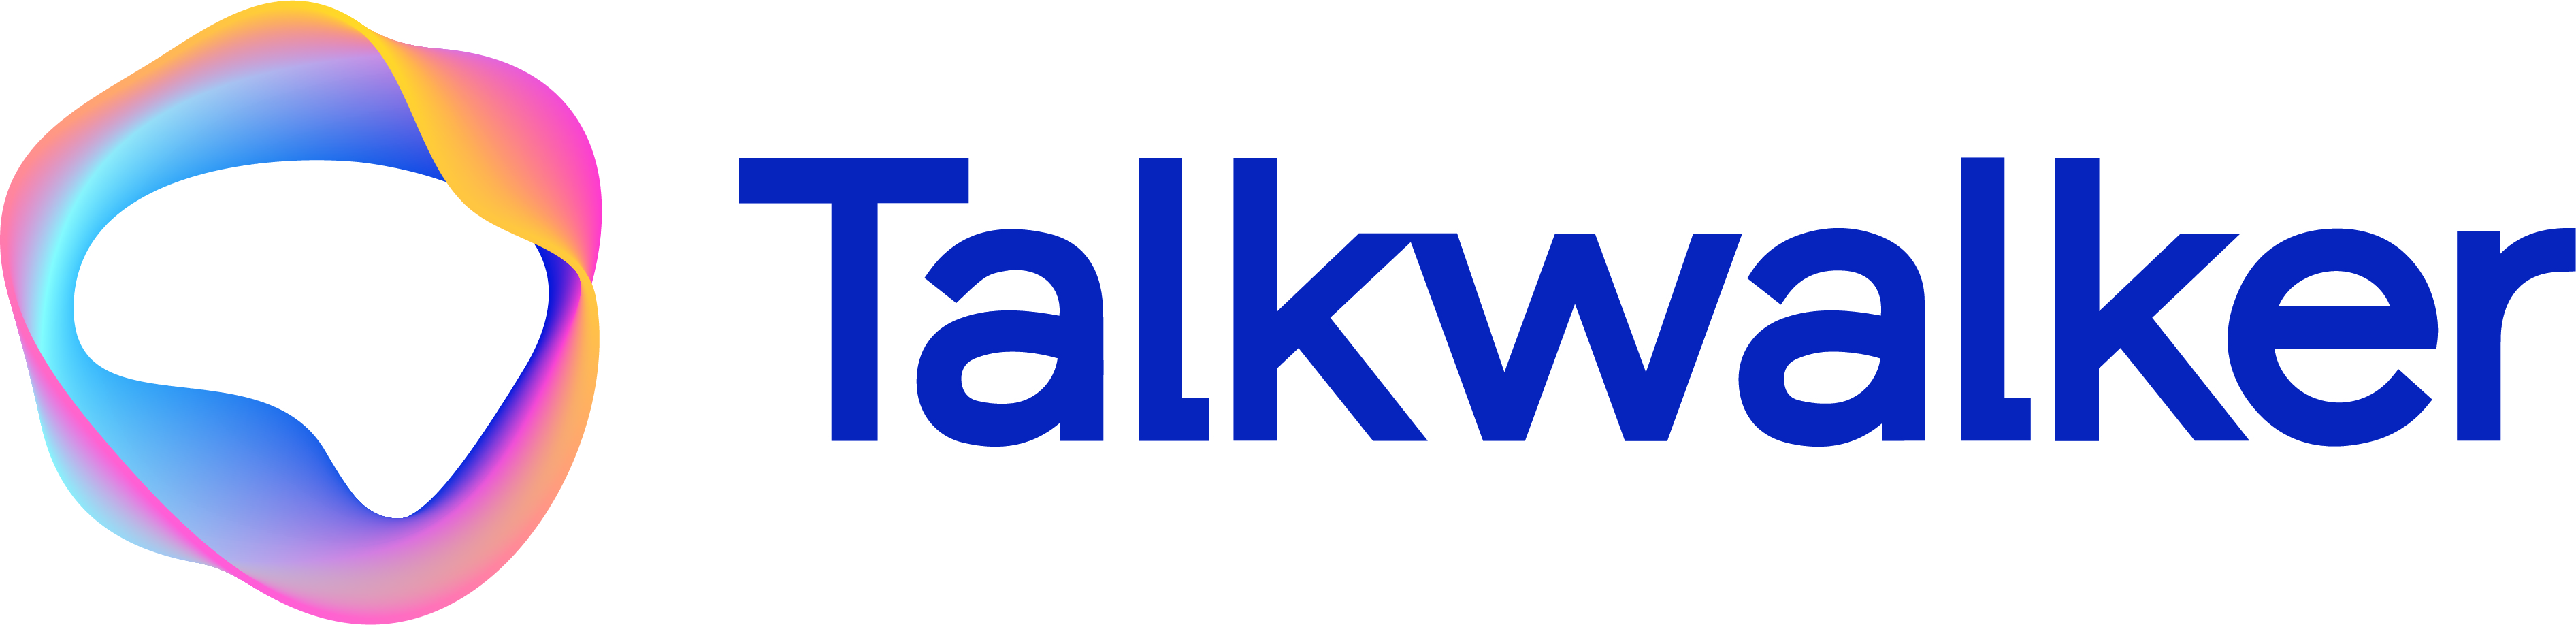 Talkwalker Logo_Full_Blue